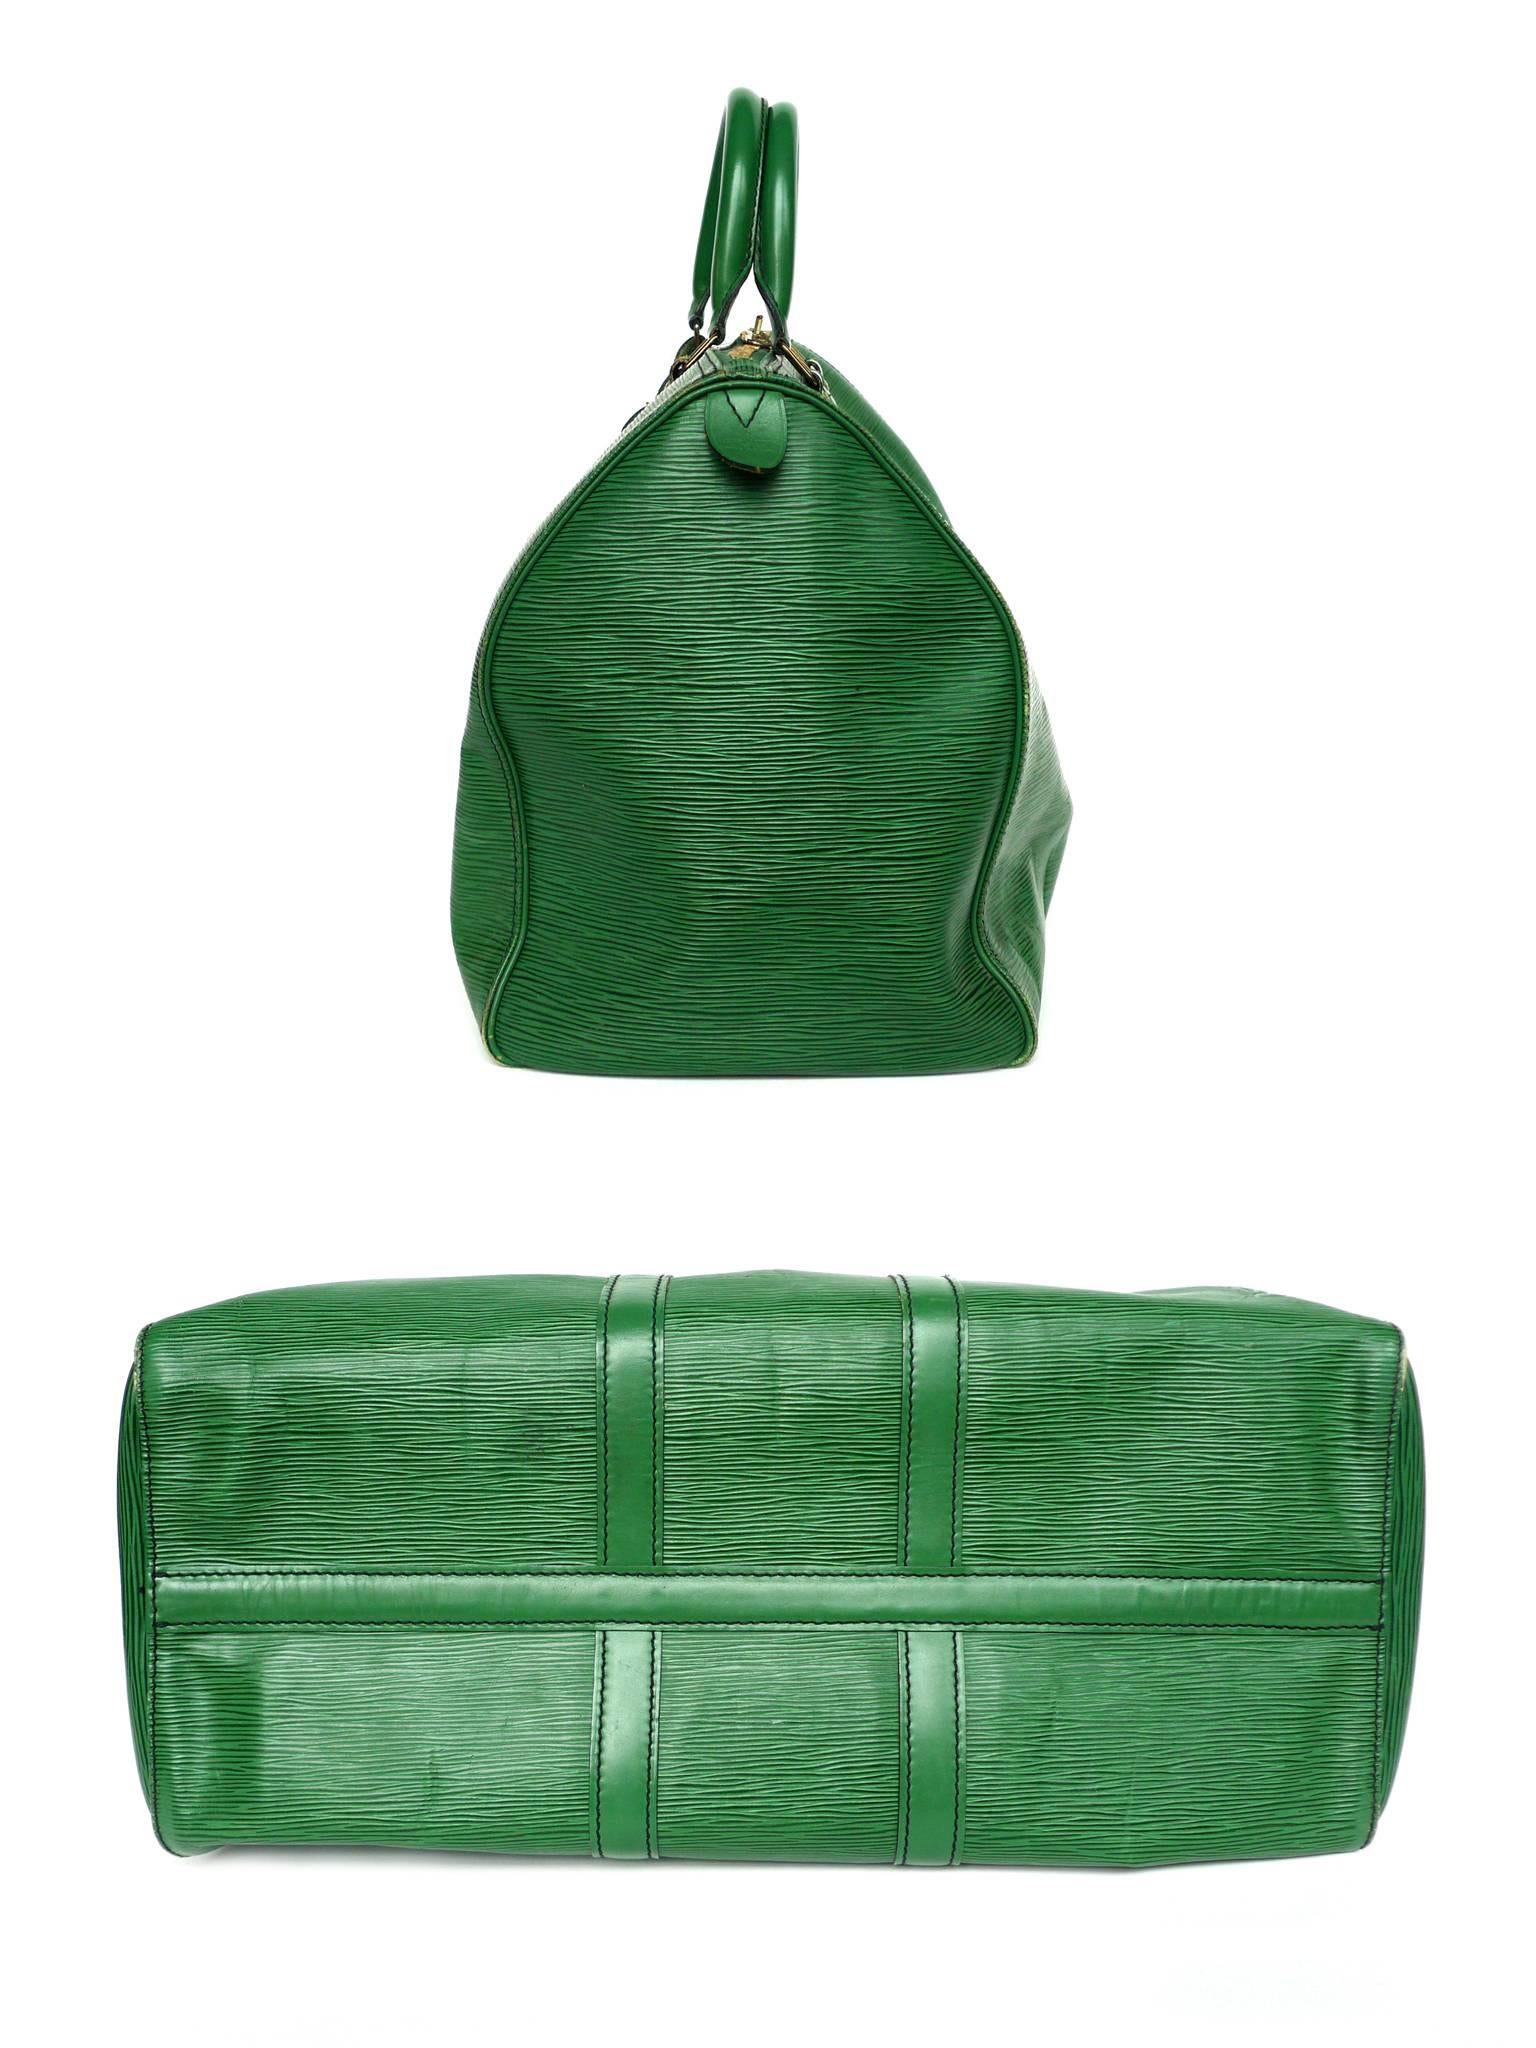 20th Century Louis Vuitton Green Epi Leather Keepall 45 Travel Bag